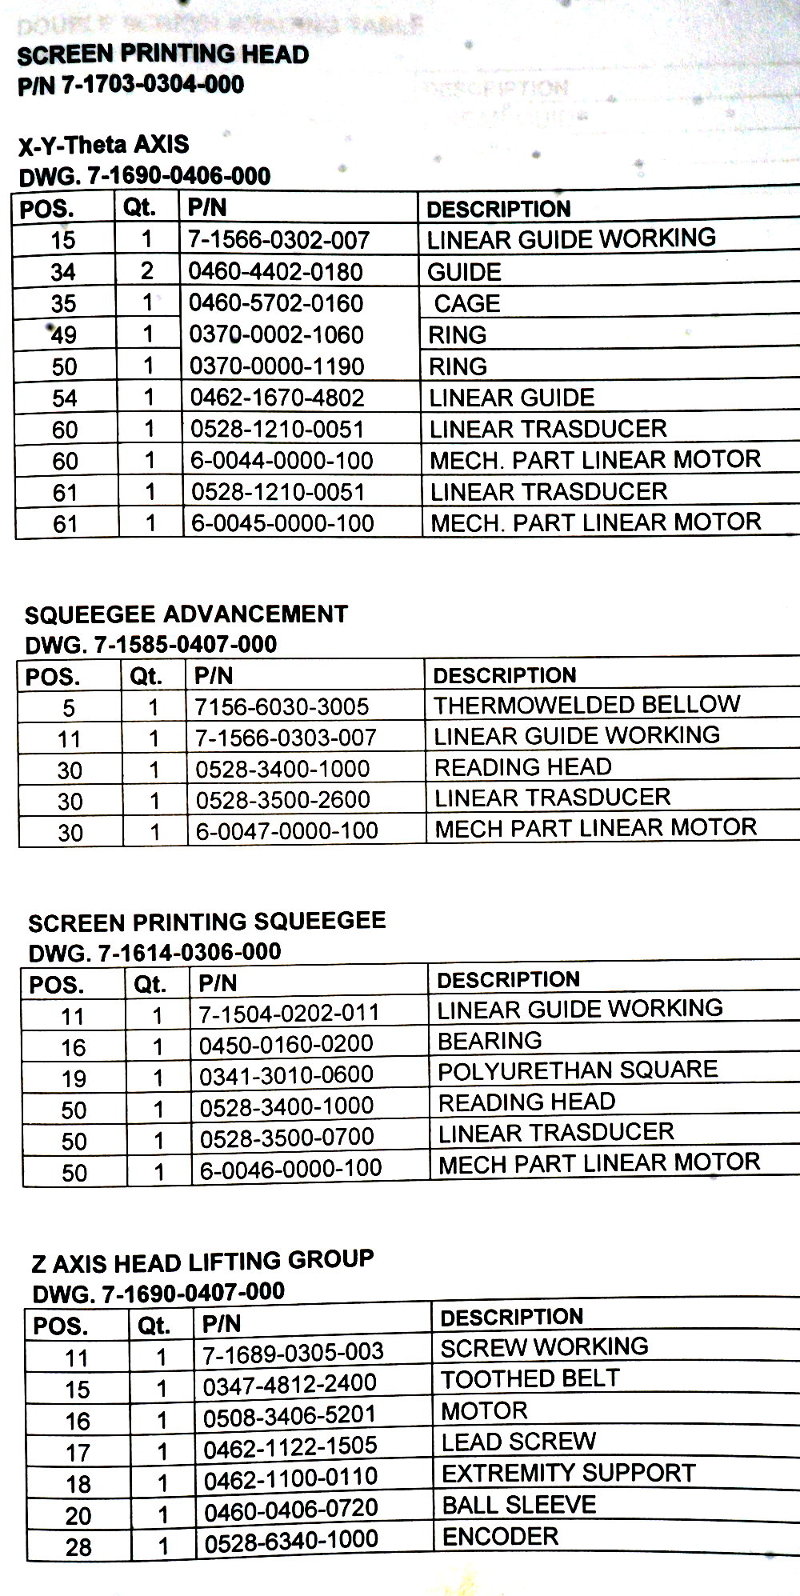 Baccini Screen Printer 2